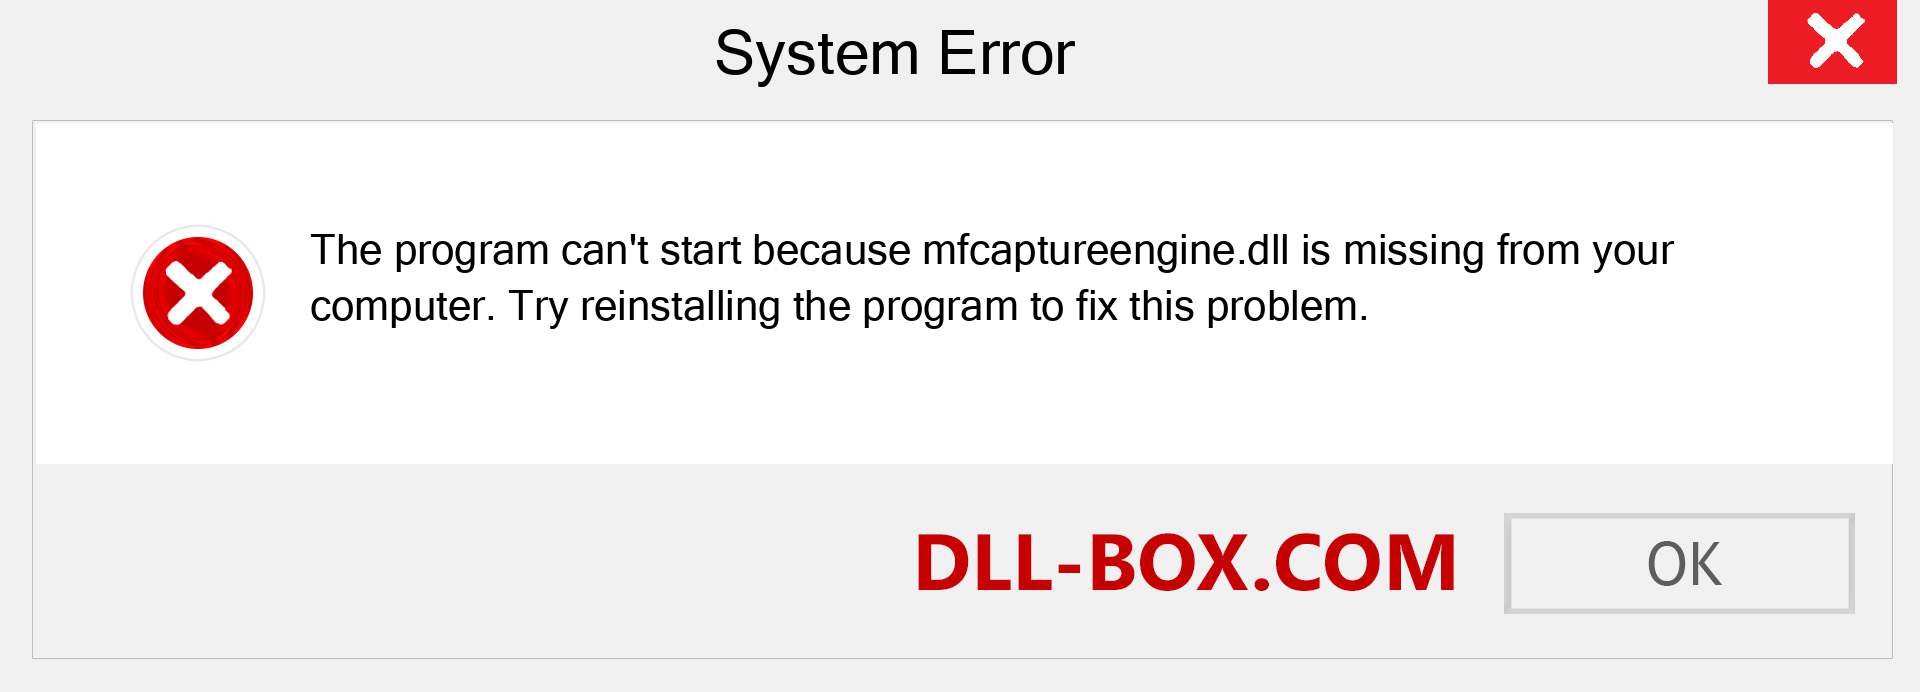  mfcaptureengine.dll file is missing?. Download for Windows 7, 8, 10 - Fix  mfcaptureengine dll Missing Error on Windows, photos, images